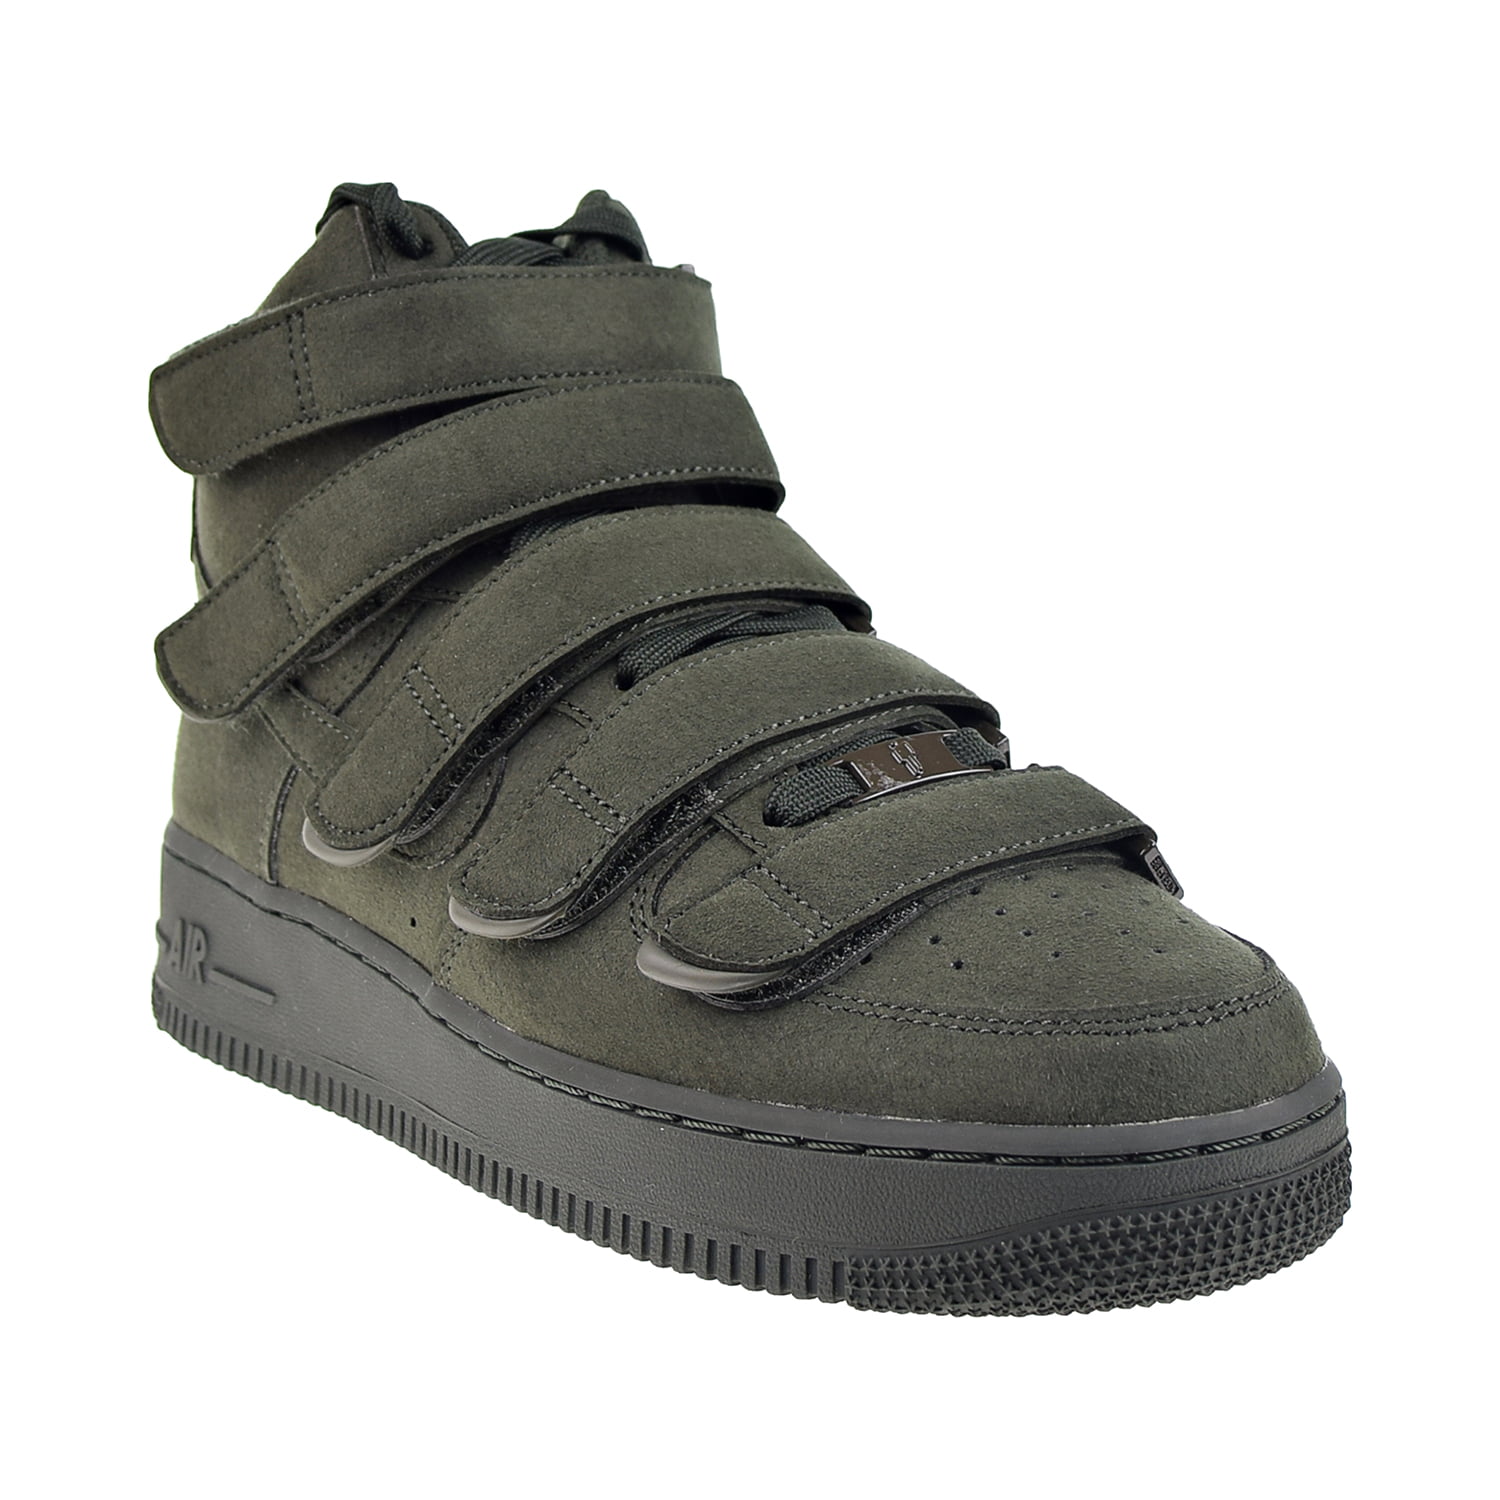 Nike Air Force 1 High x Billie Eilish Men's Shoes Sequoia dm7926 